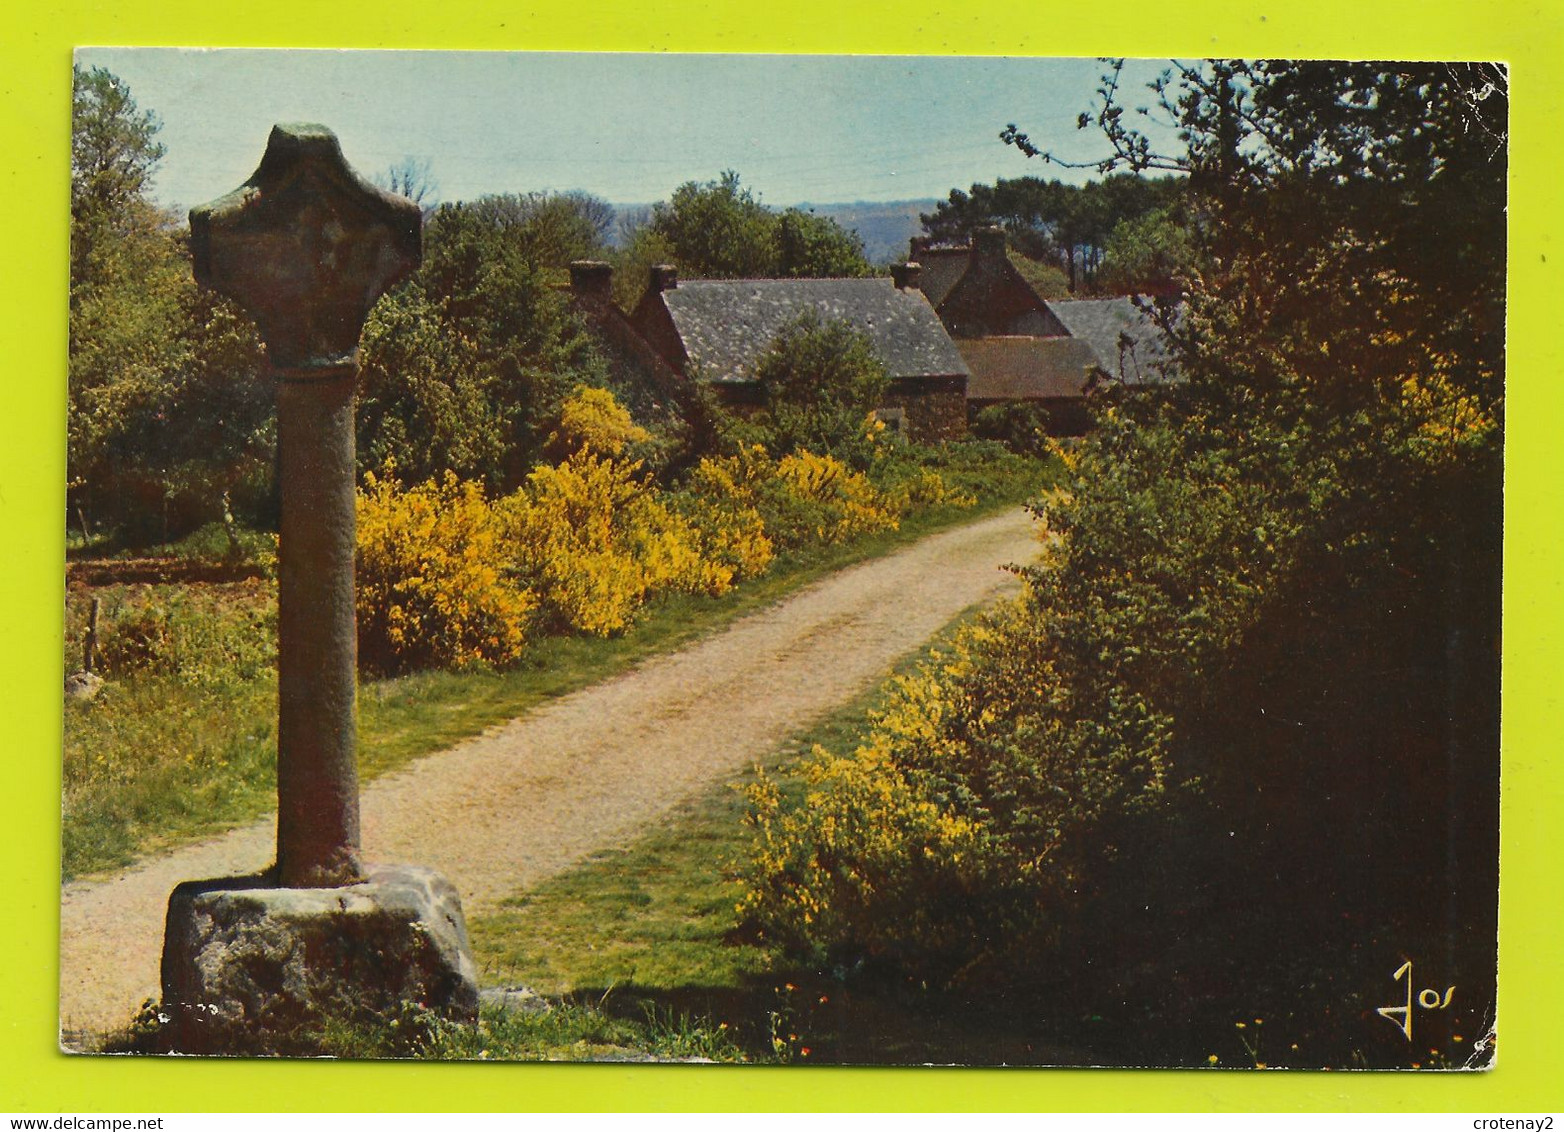 56 Région De JOSSELIN N°1095 Croix De Carrefour Postée De Chateaulun En 1977 - Josselin